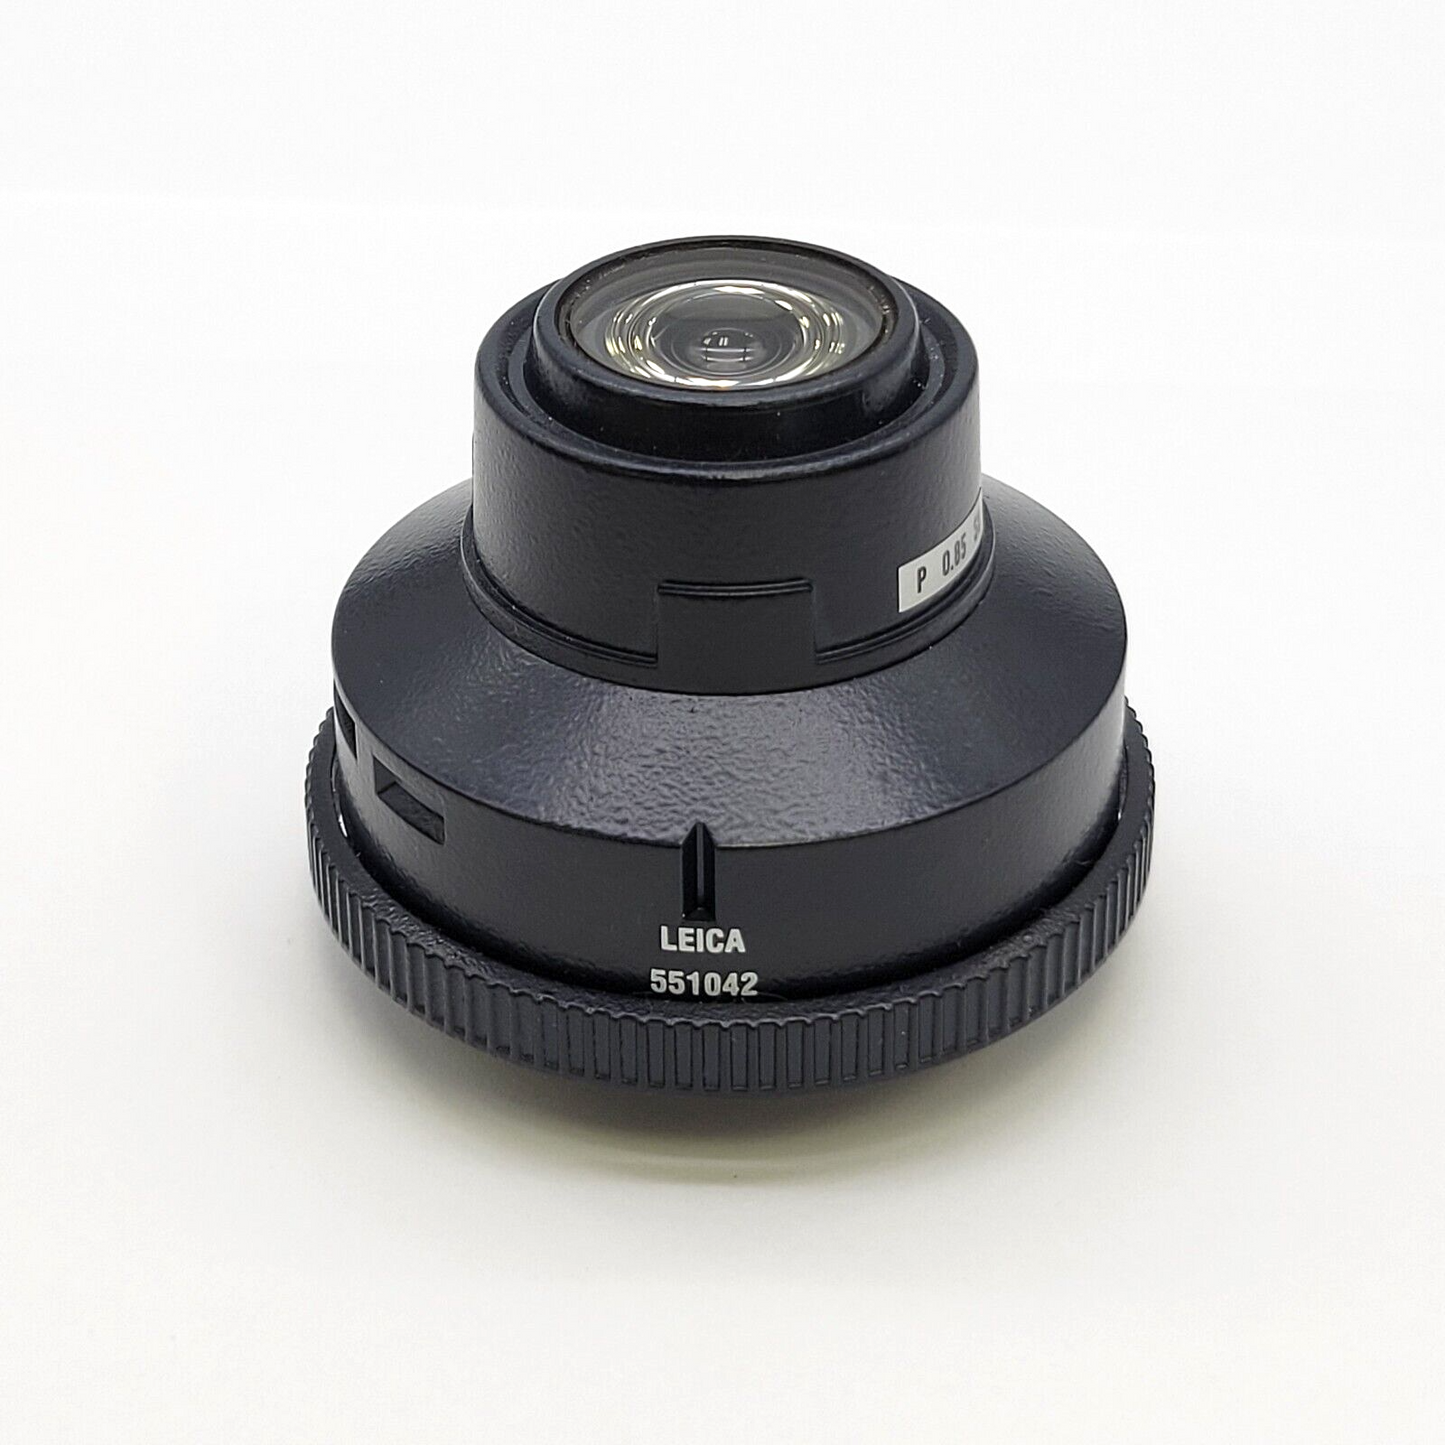 Leica Microscope Condenser 0.85 S1 for DM Series 11551042 - microscopemarketplace